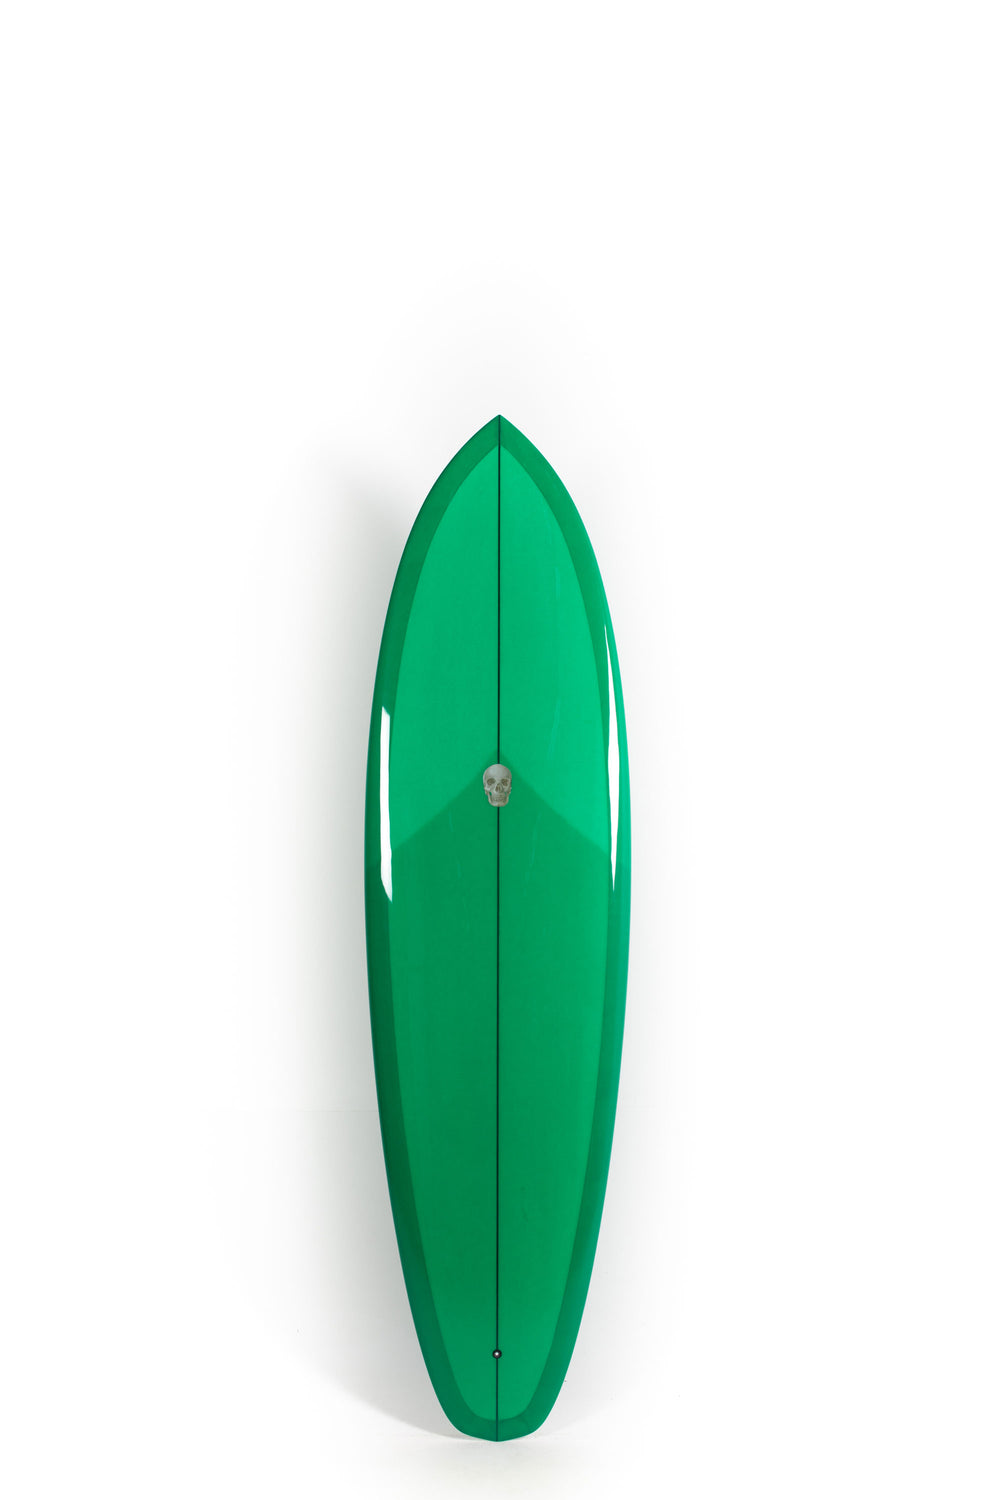 Pukas Surf Shop - Christenson Surfboards - ULTRA TRACKER - 6'8